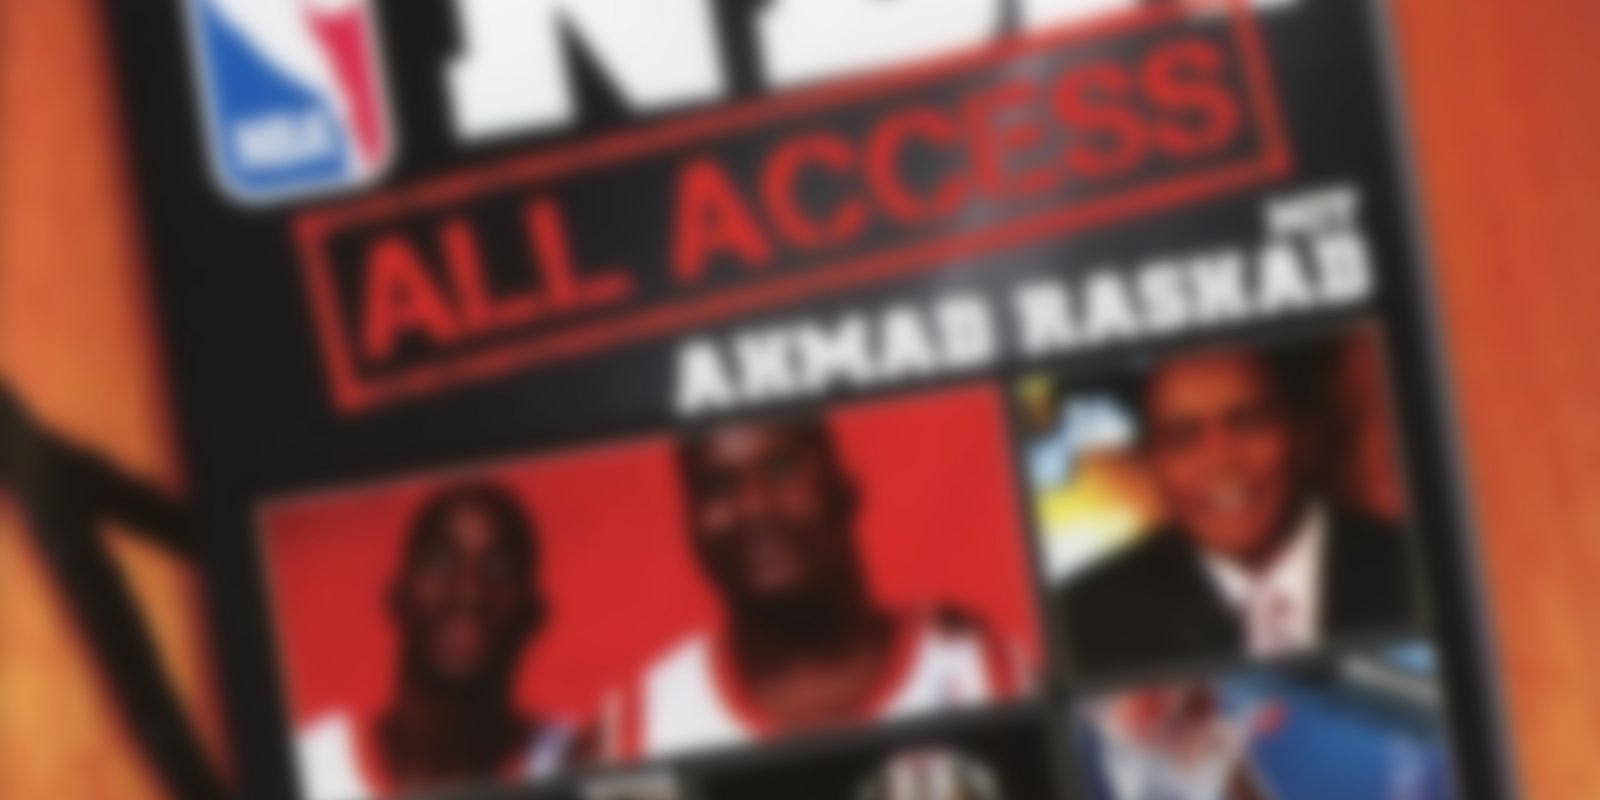 NBA - All Access